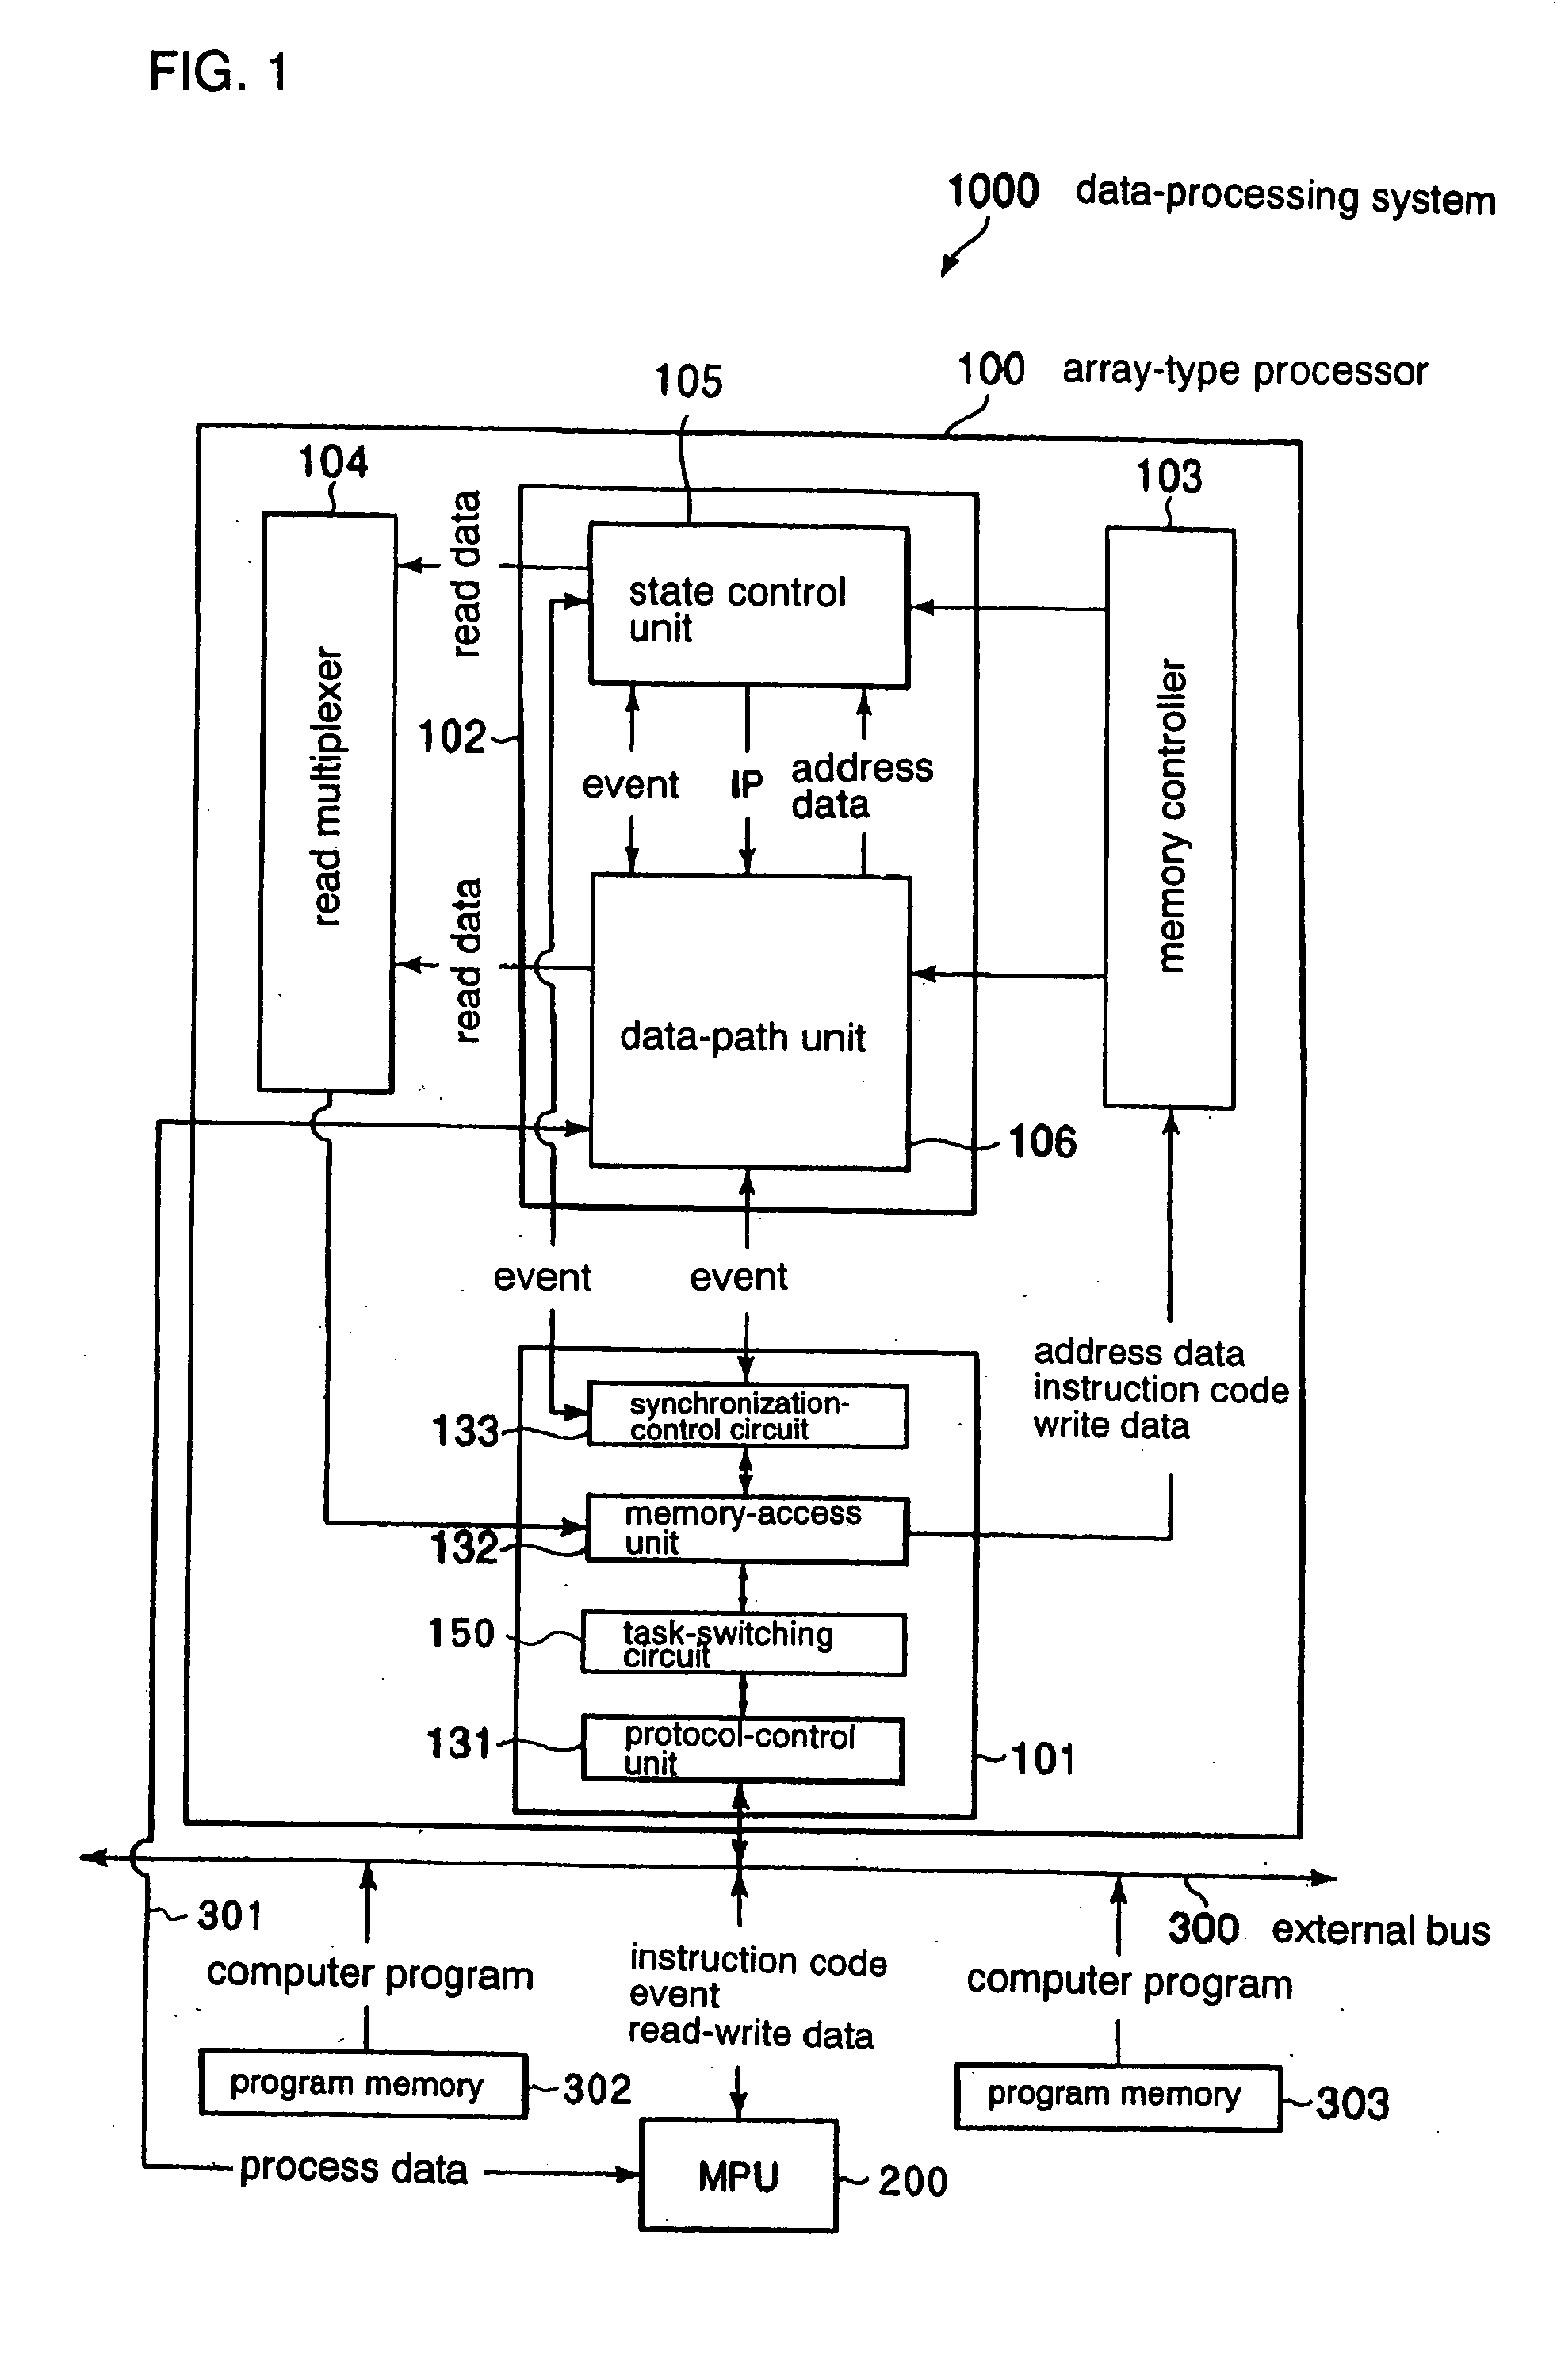 Array-type computer processor